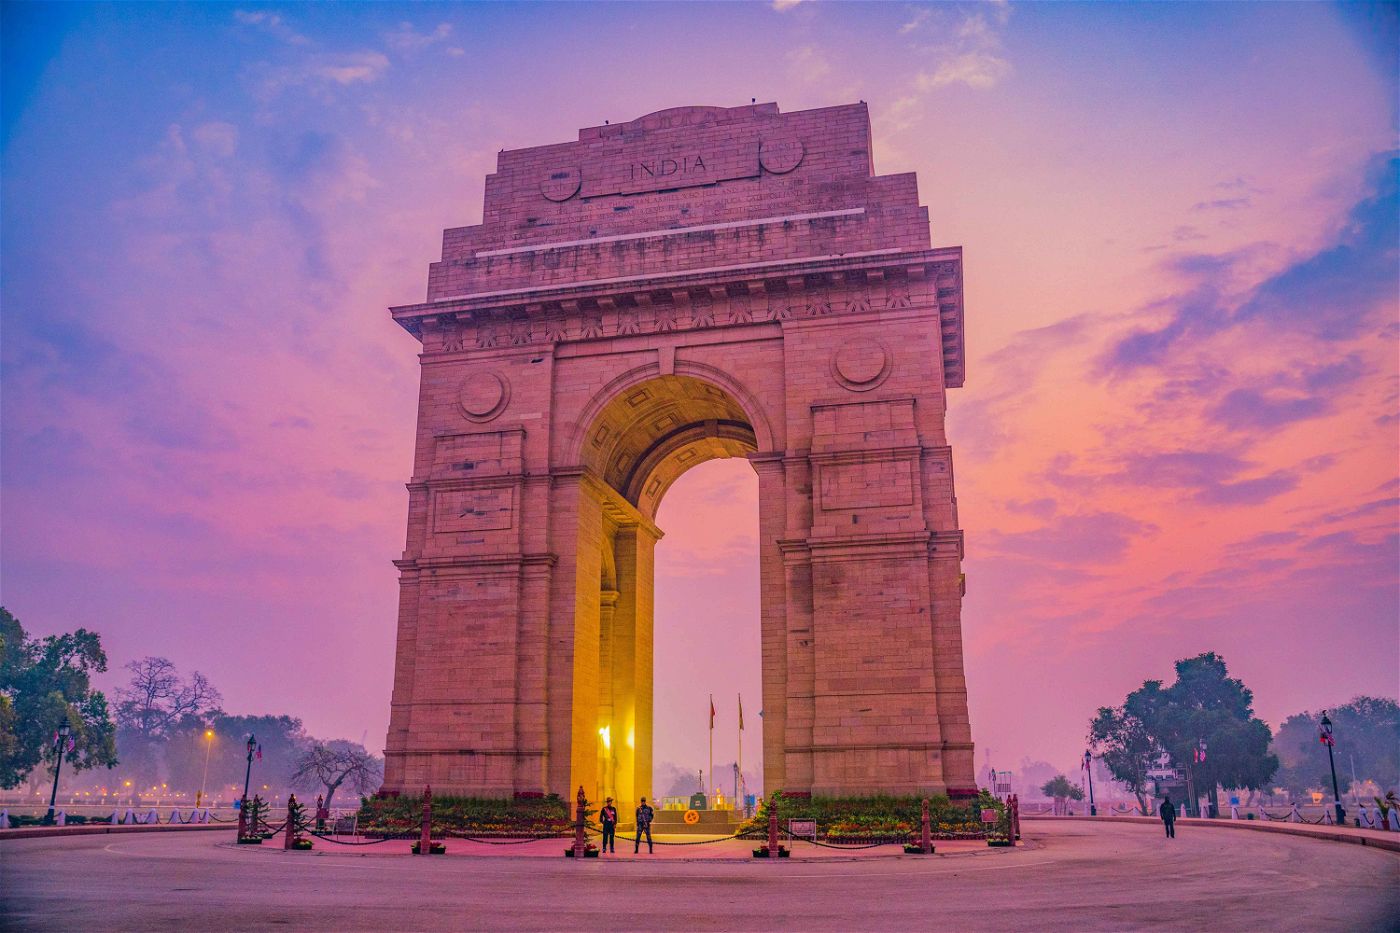 India Gate: 25 mins away